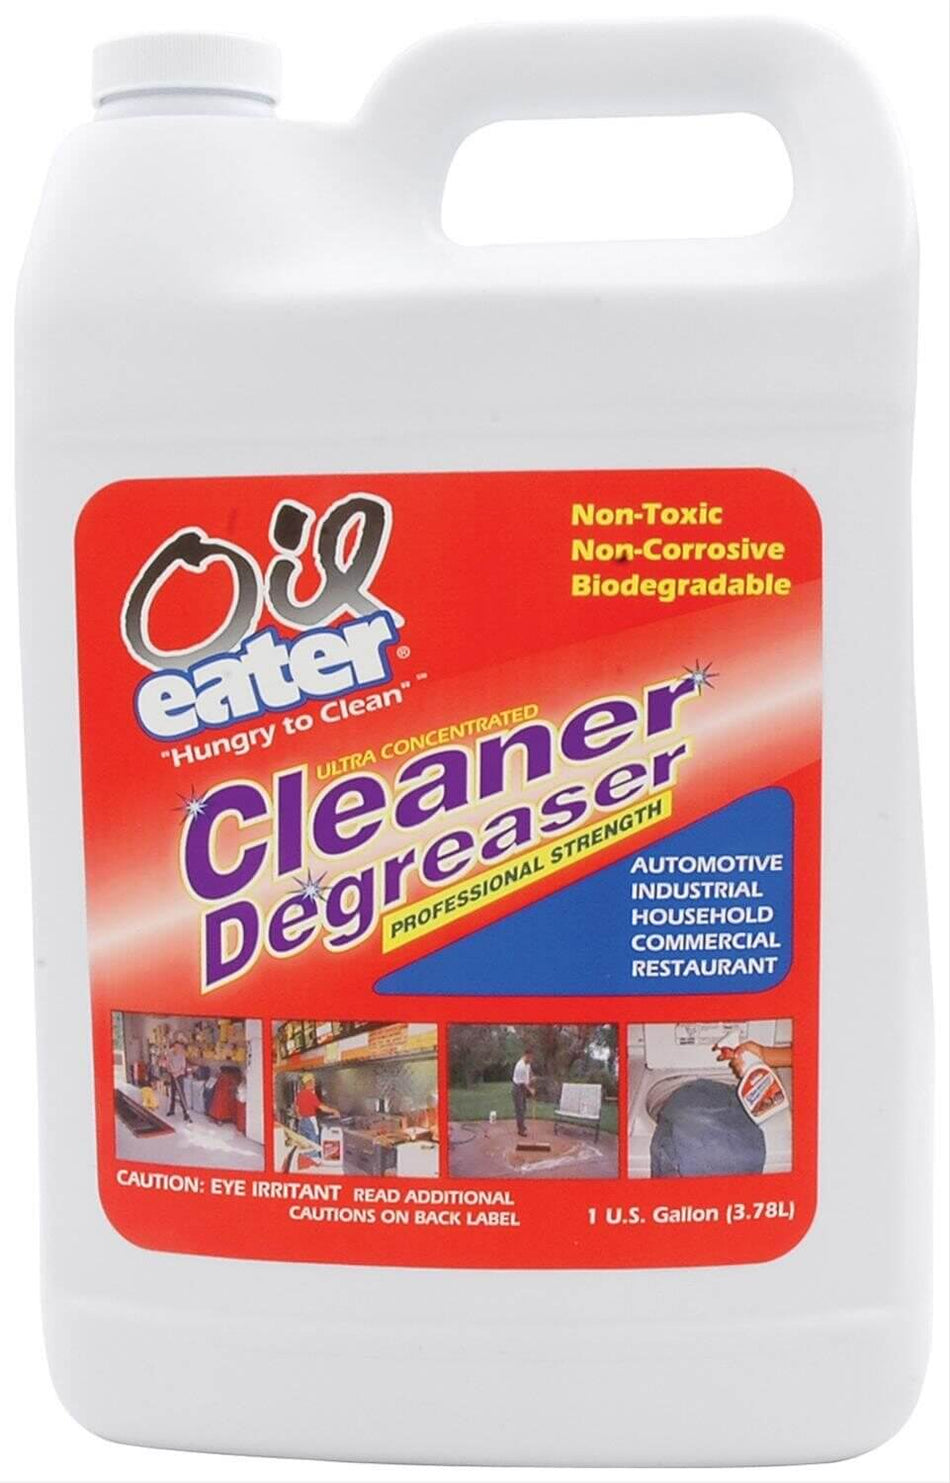 Oil Eater Cleaner and Degreaser - $19.99